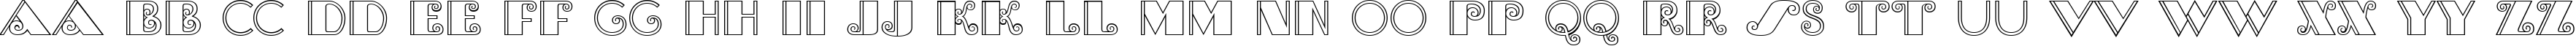 Пример написания английского алфавита шрифтом Brasileiro Two Medium